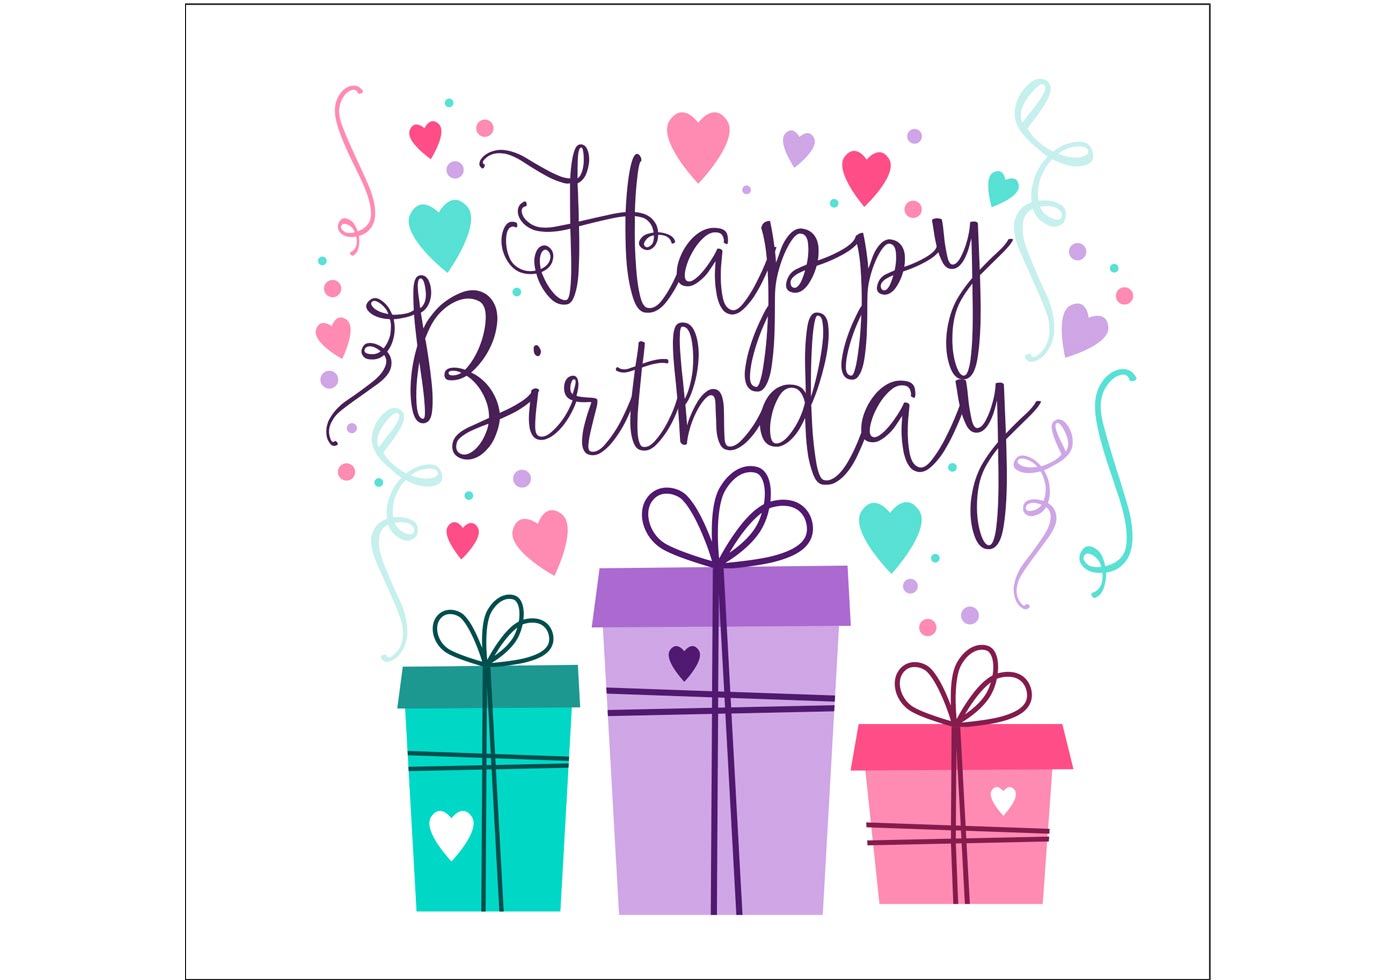 Birthday Card Design Download Free Vector Art, Stock